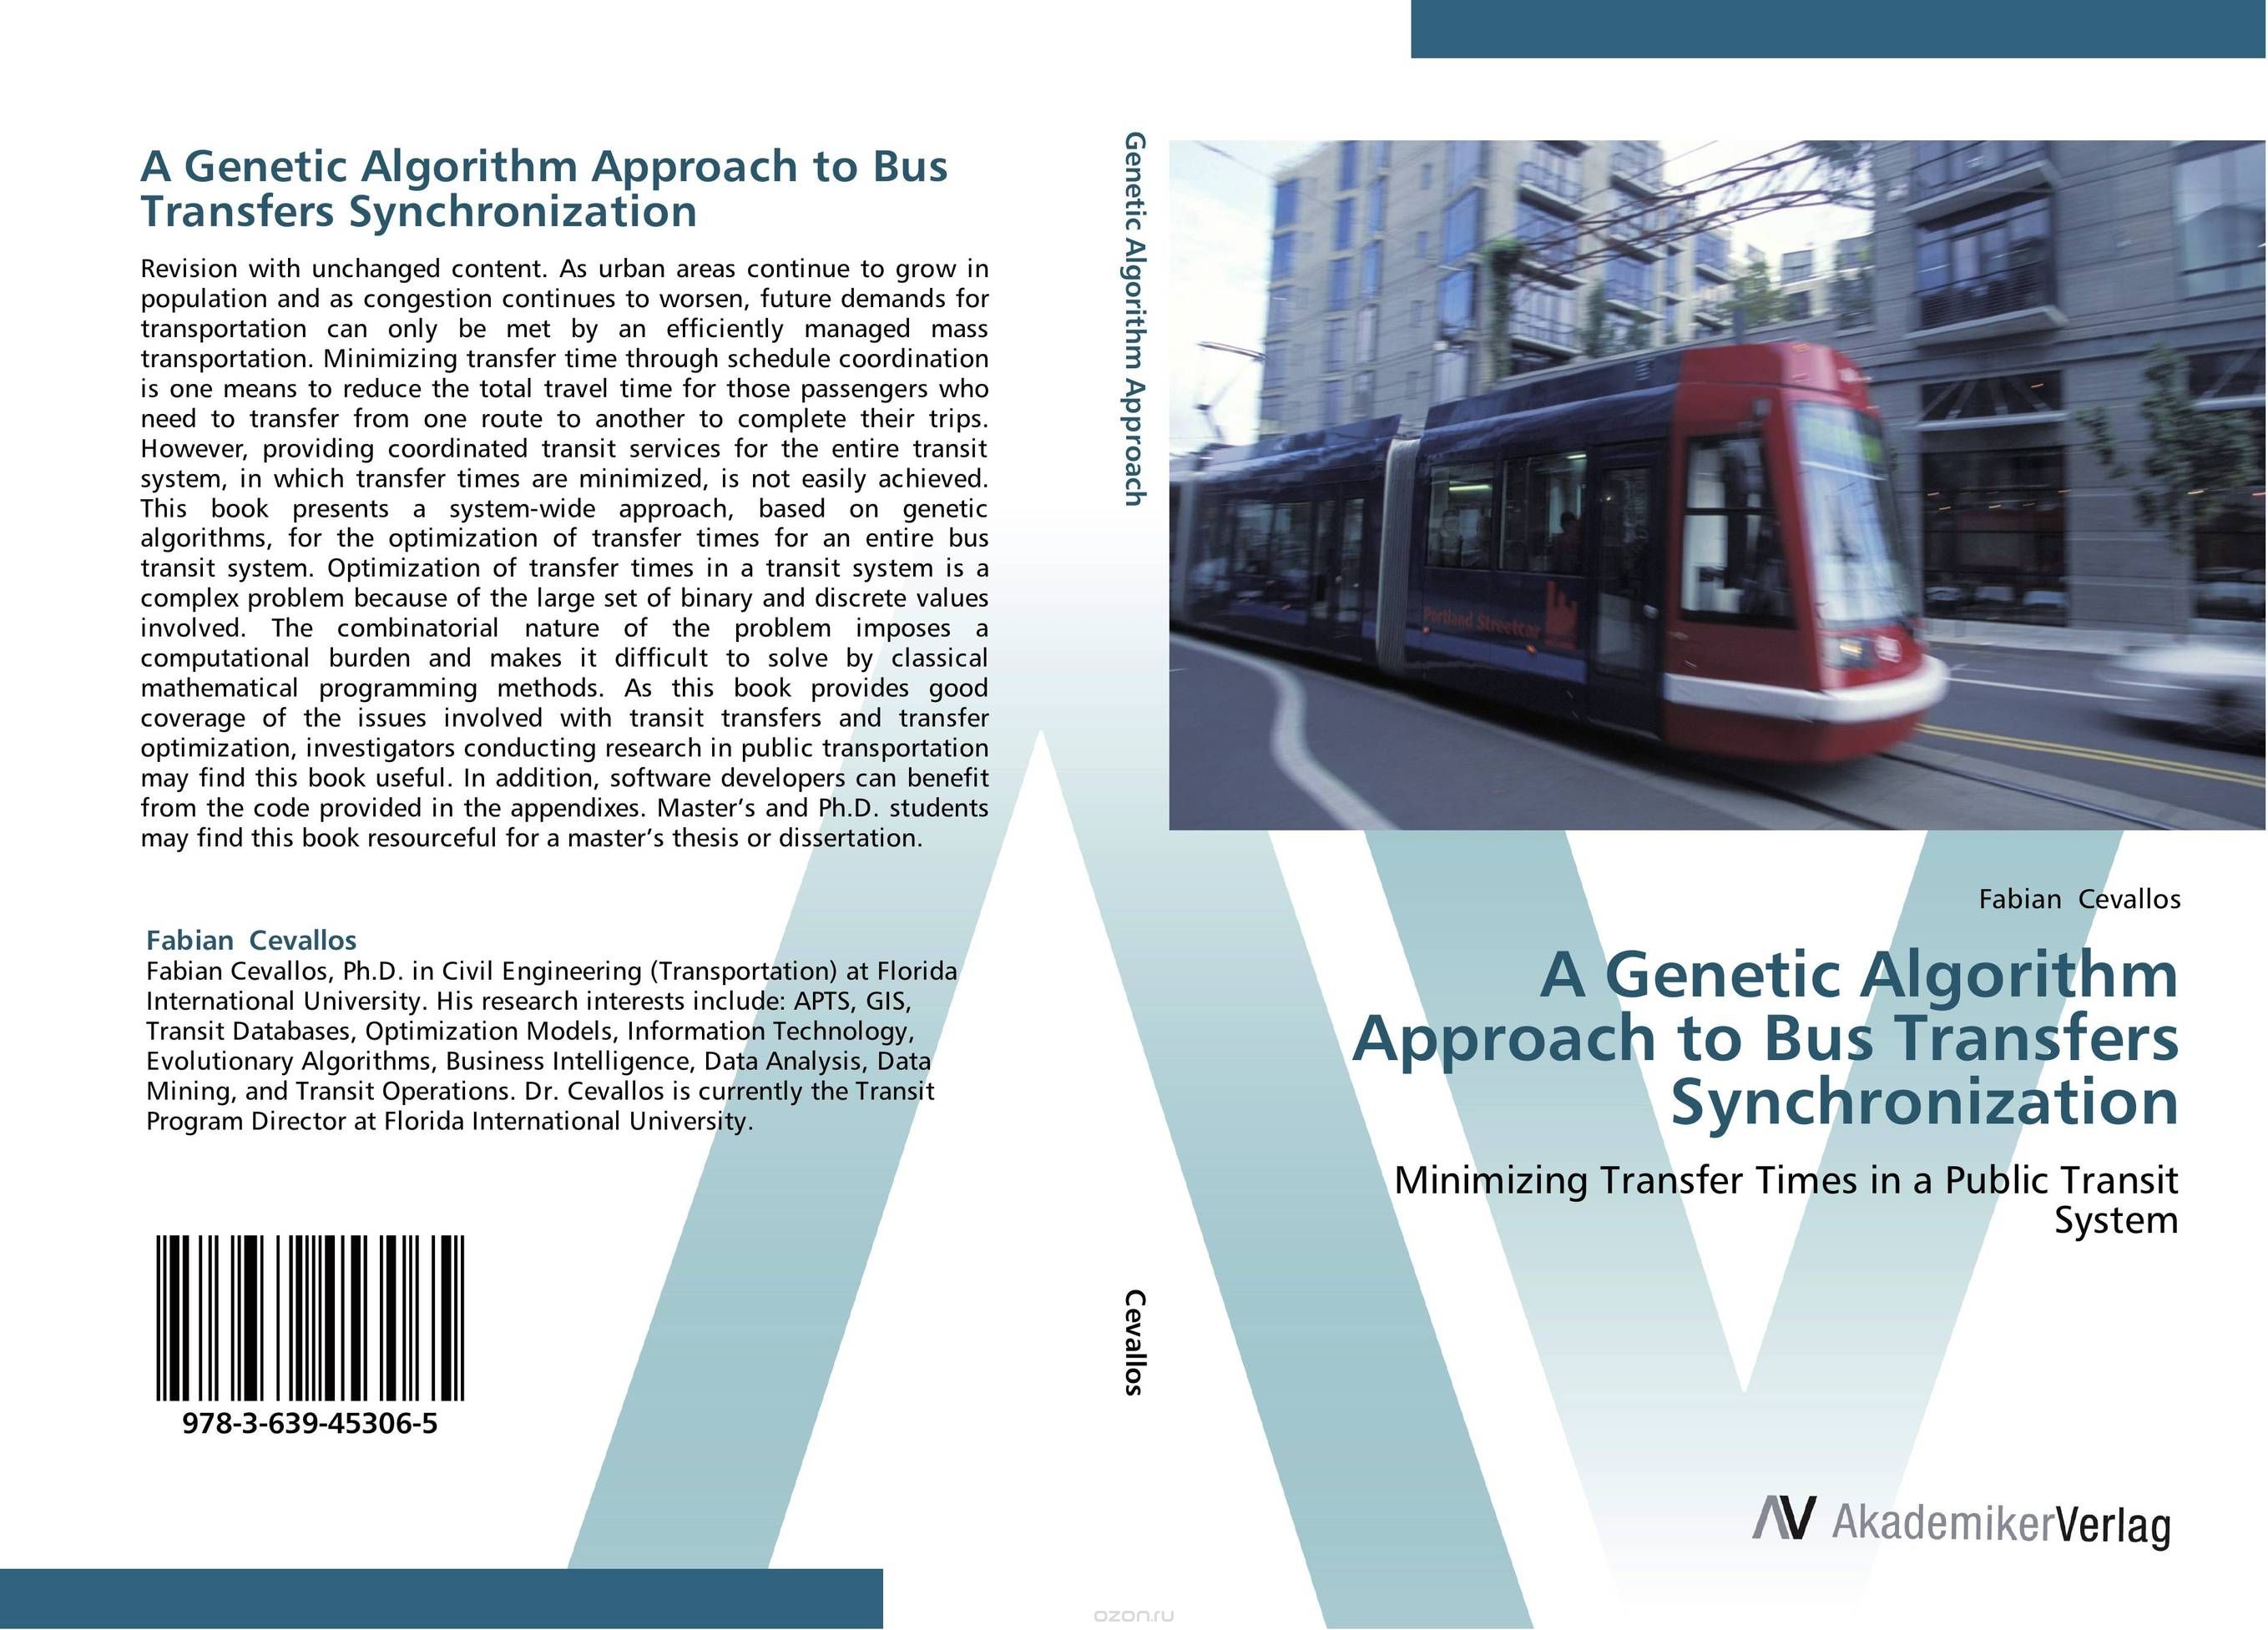 Скачать книгу "A Genetic Algorithm Approach to Bus Transfers Synchronization"